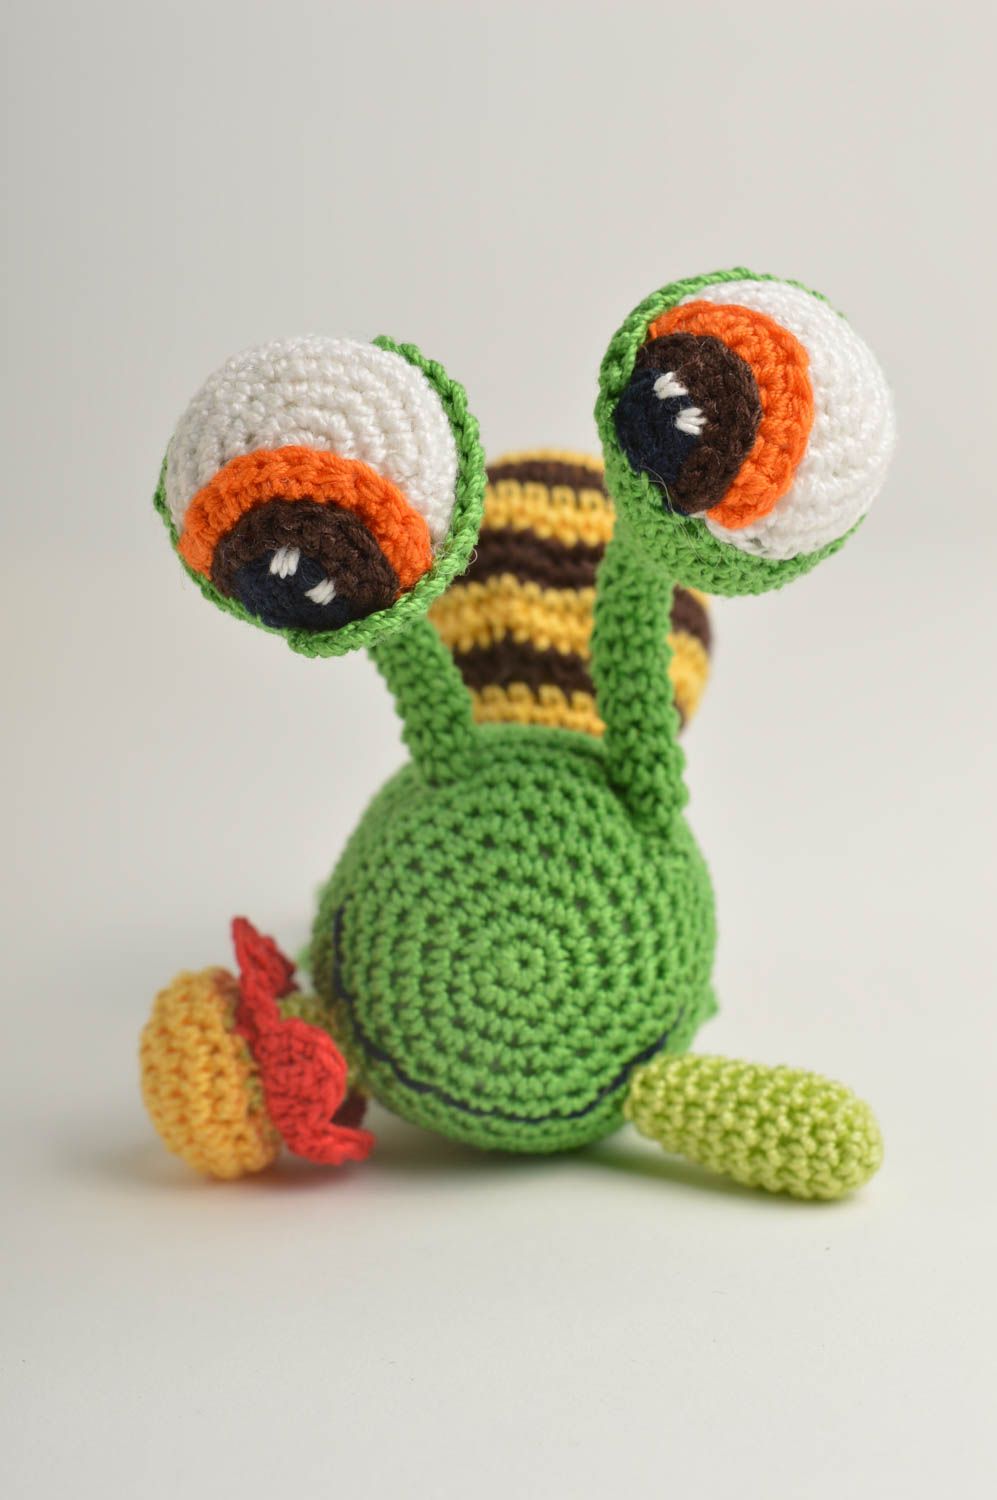 Beautiful handmade crochet toy stuffed soft toy interior decorating gift ideas photo 3